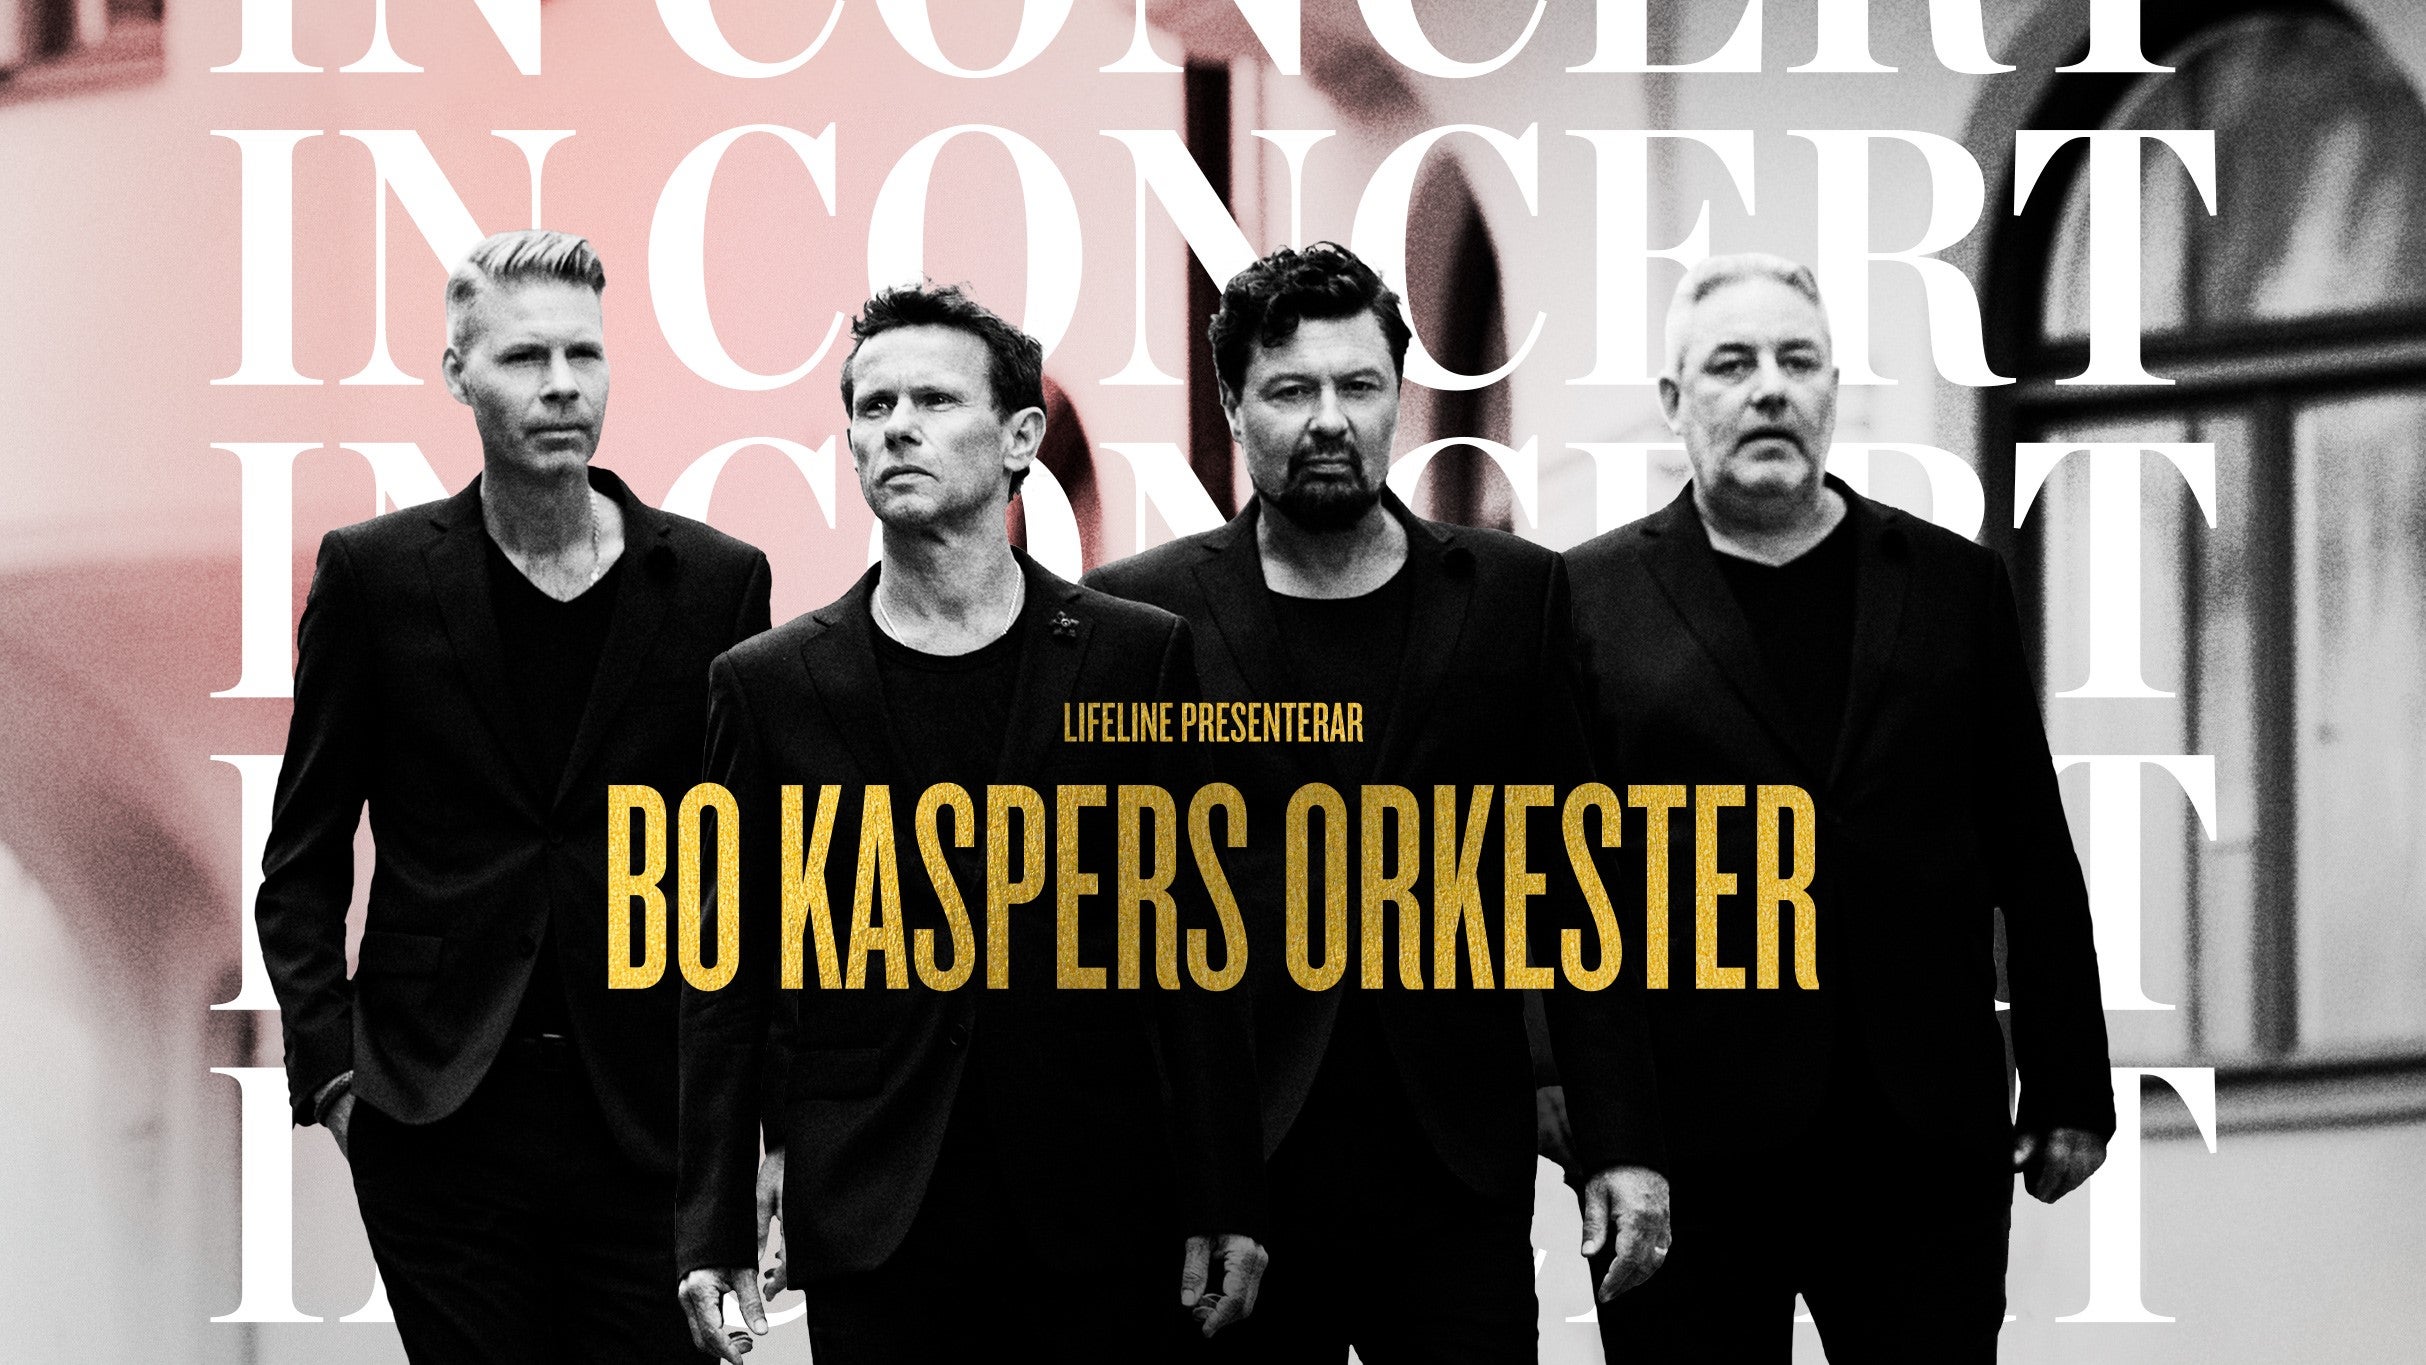 Bo Kaspers Orkester presale information on freepresalepasswords.com